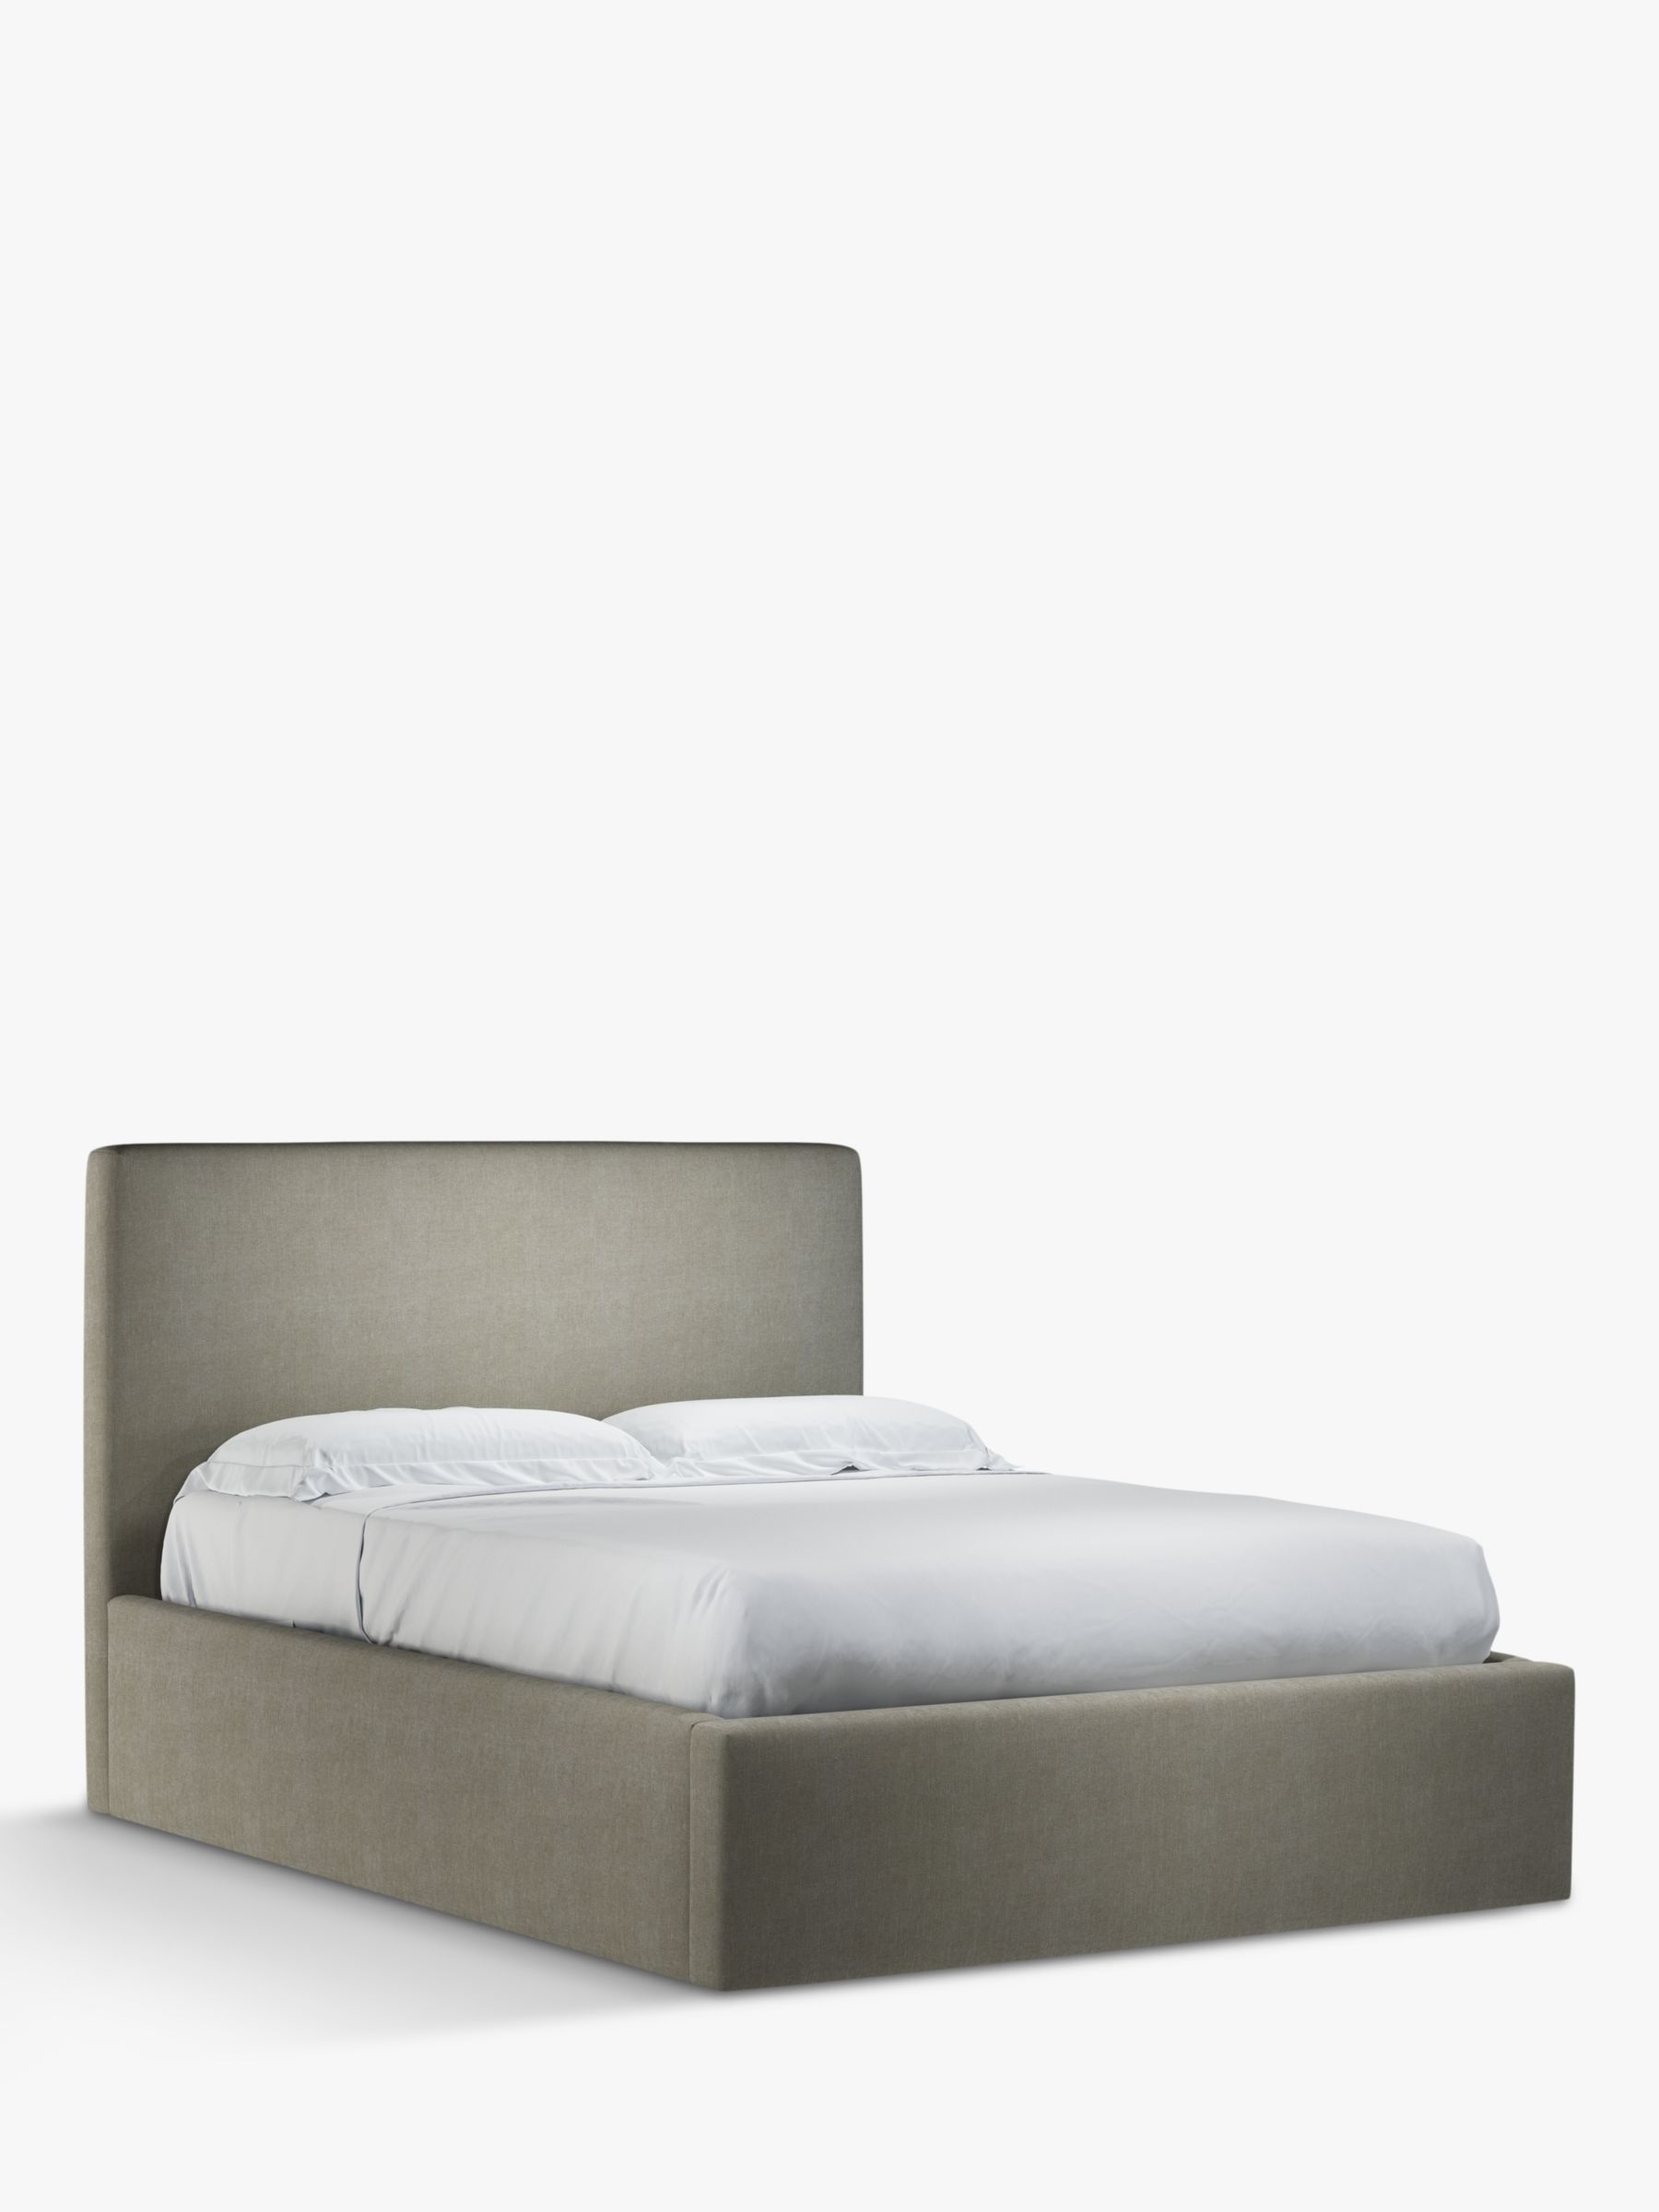 John Lewis Partners Emily Ottoman, King Size Linen Bed